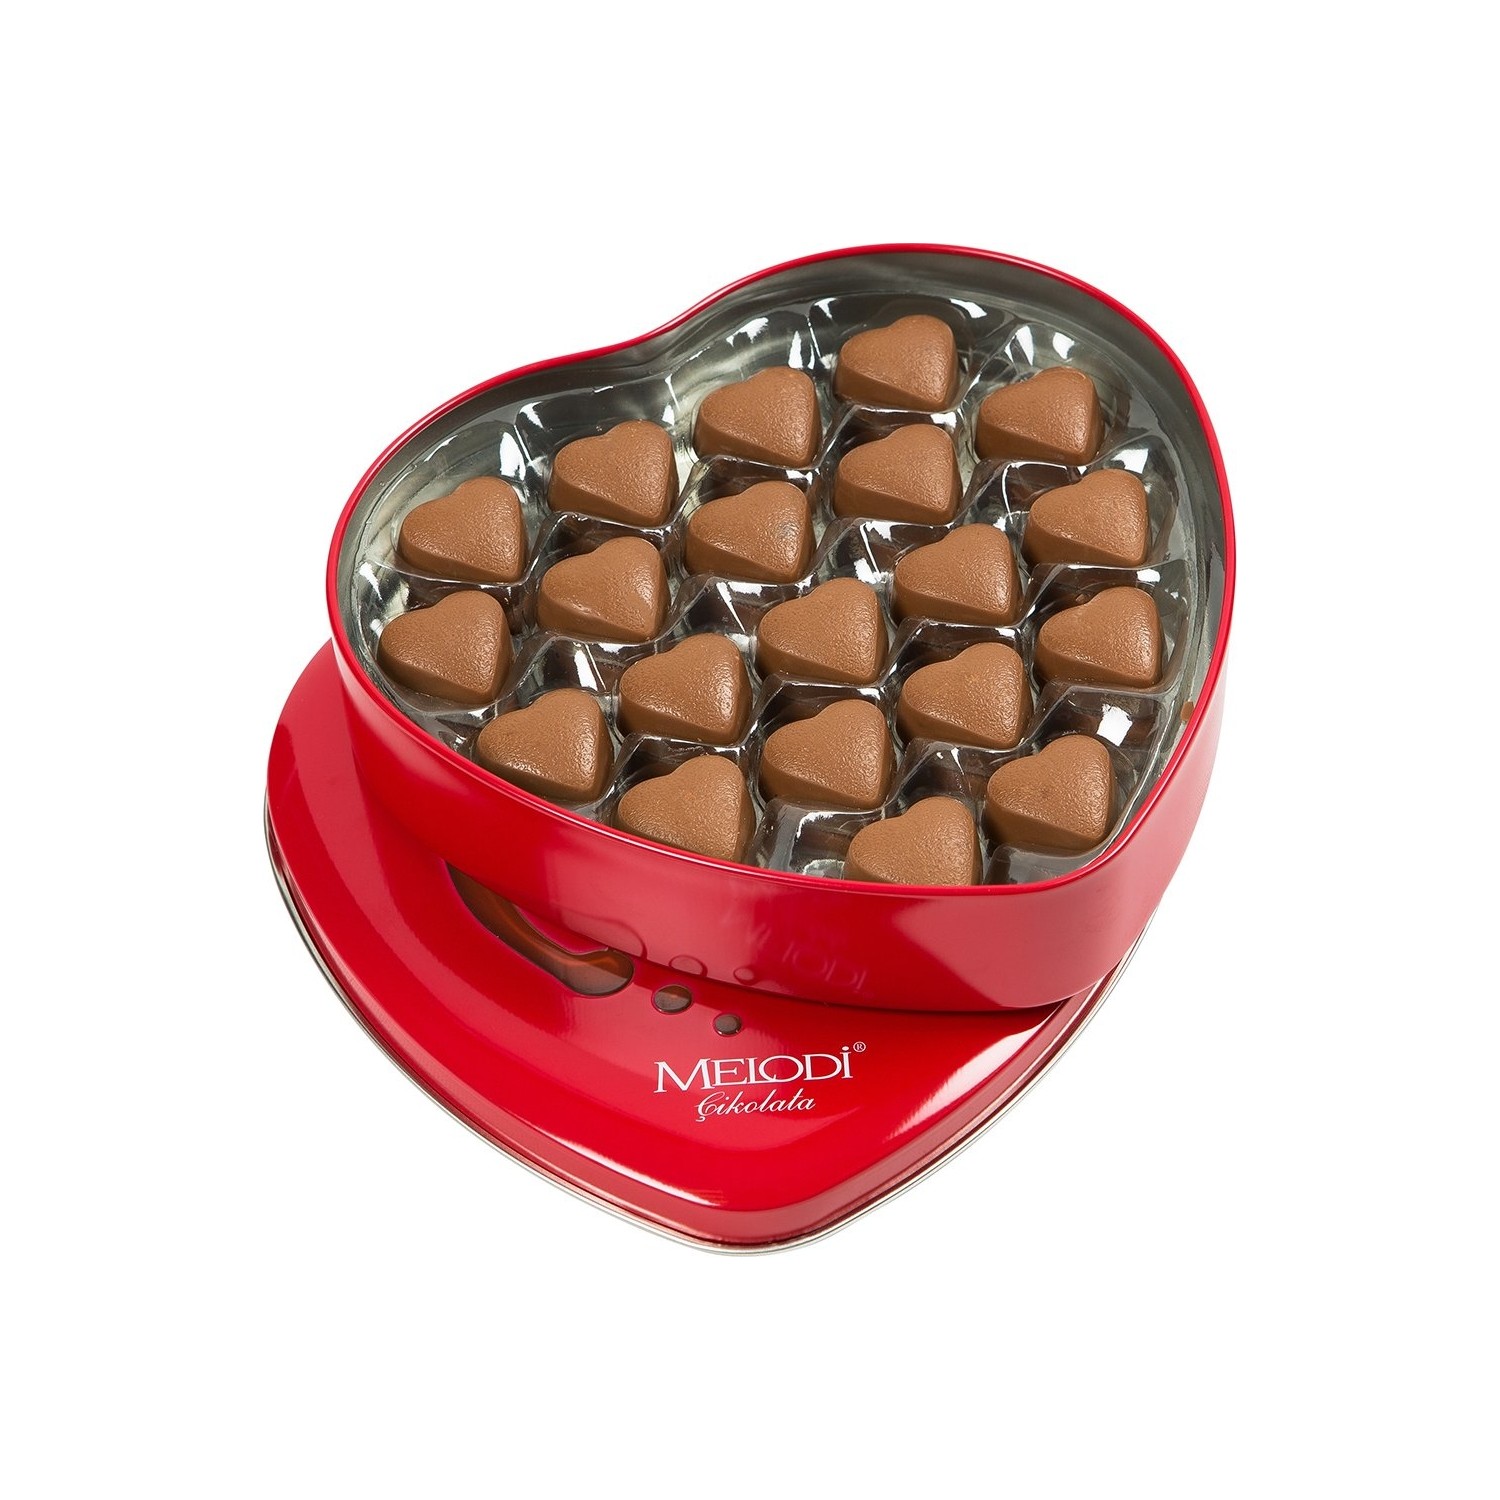 Melodi Çikolata Kalp Çikolata Kırmızı Metal Kutu Fiyatı